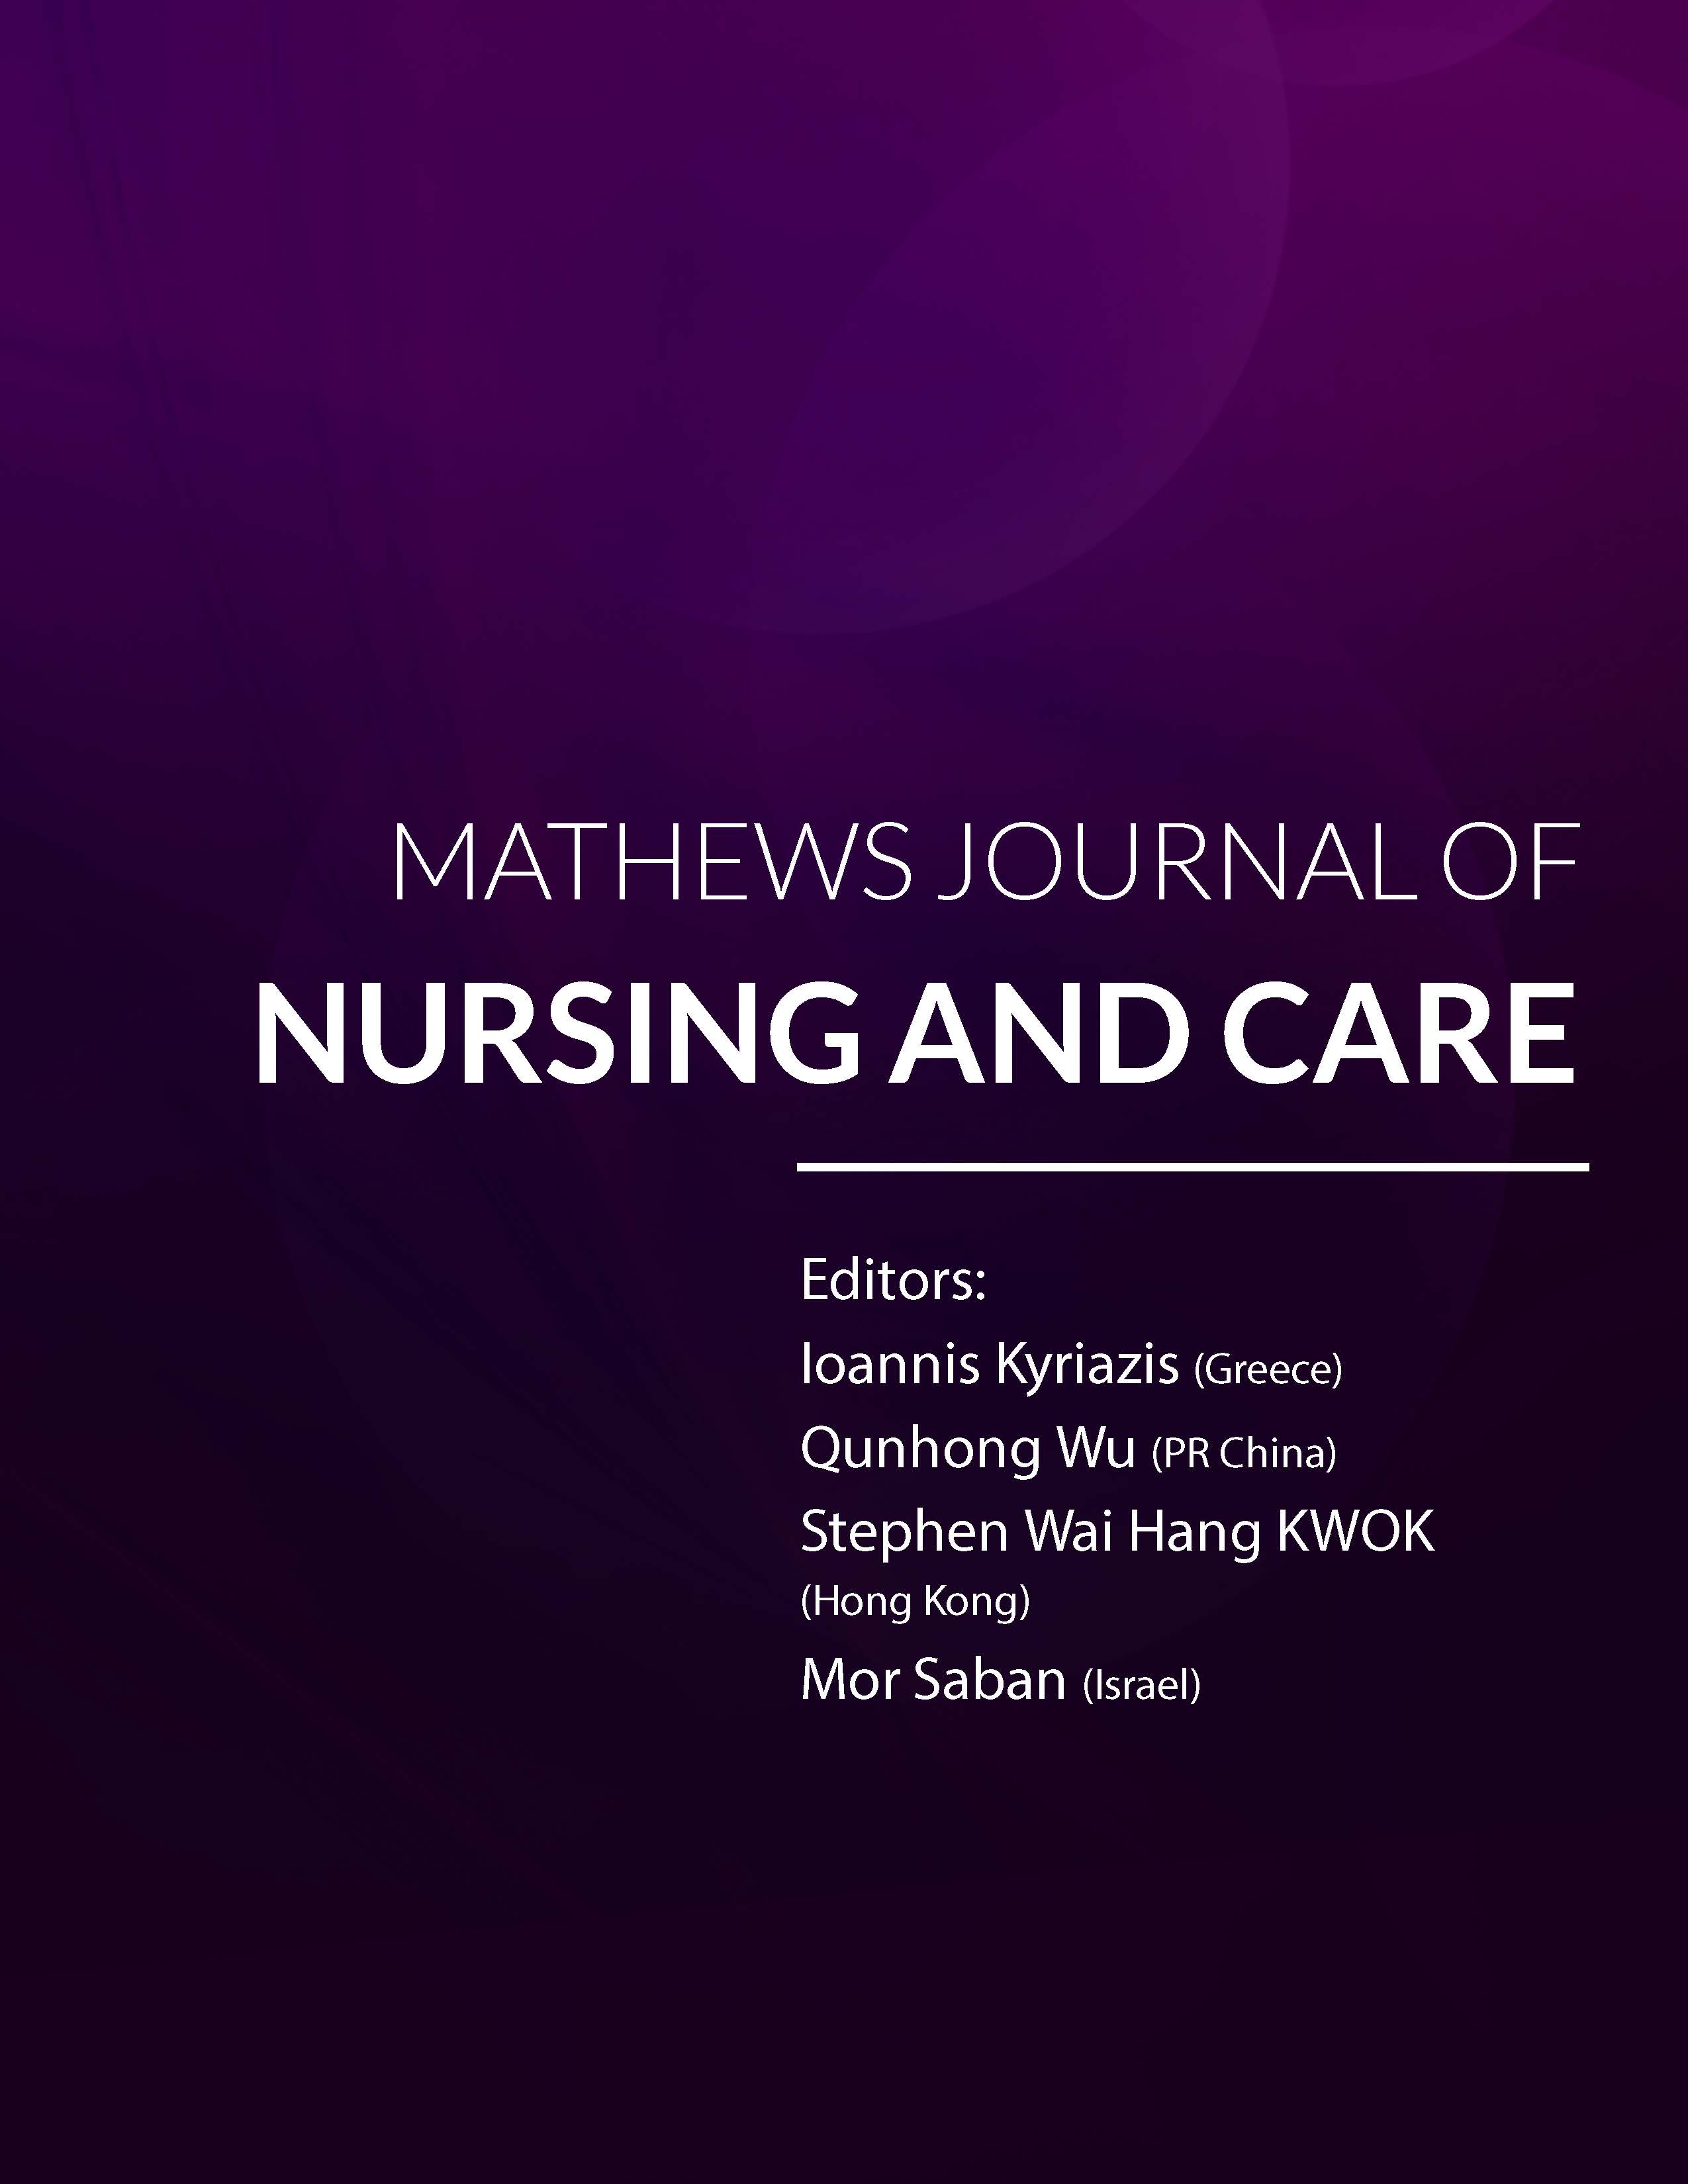 Mathews Journal of Nursing and Health Care